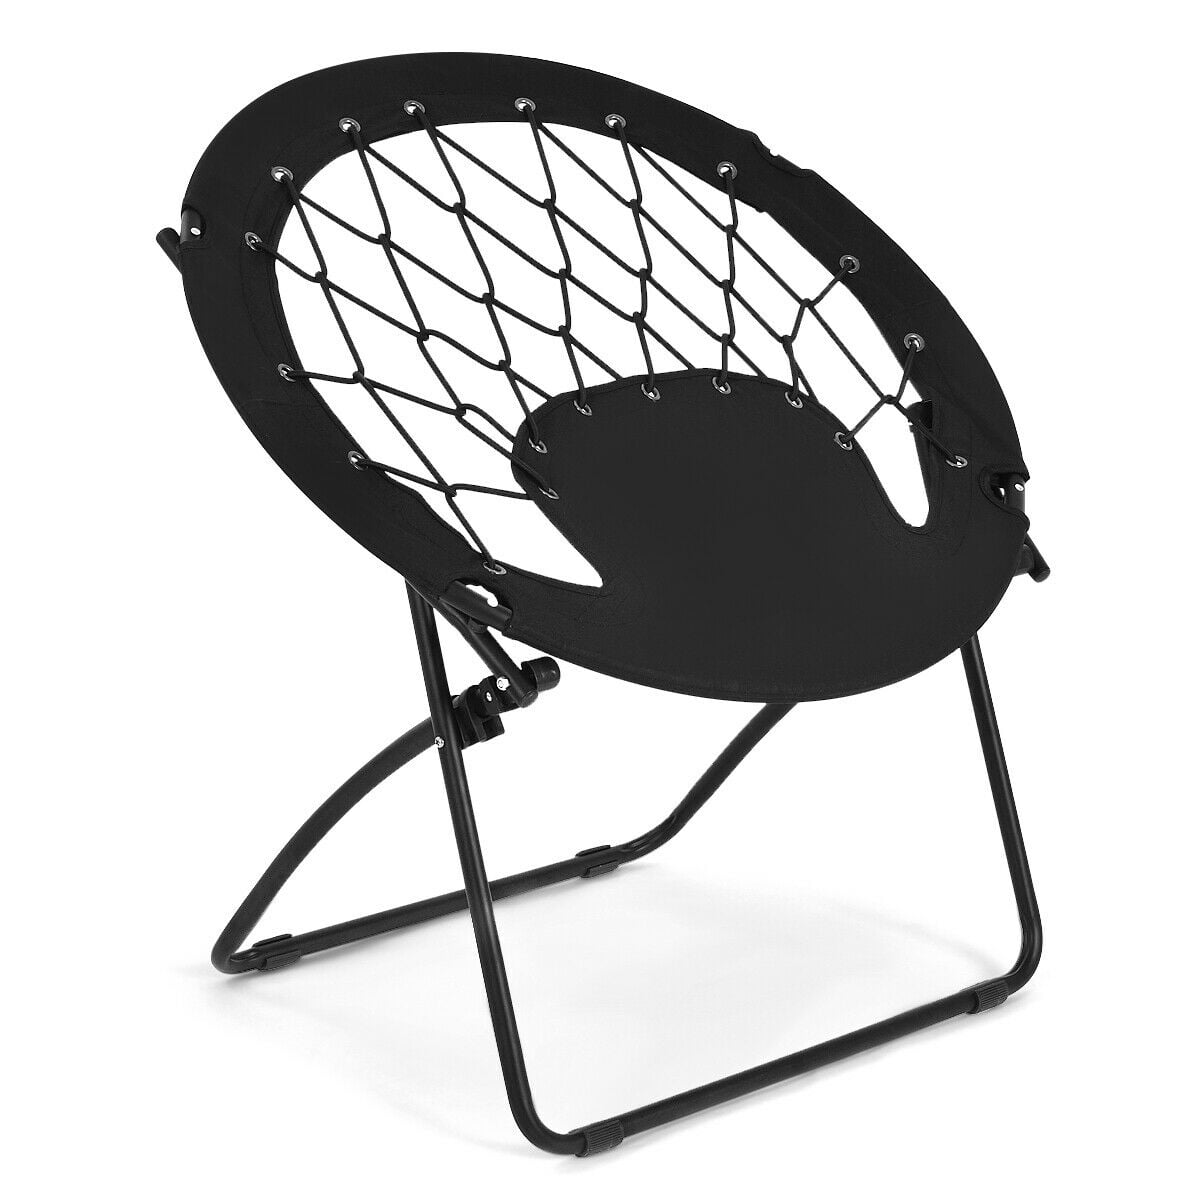 Goplus Folding Round Bungee Chair Steel Frame Outdoor Camping Hiking Garden Patio Walmart Com Walmart Com